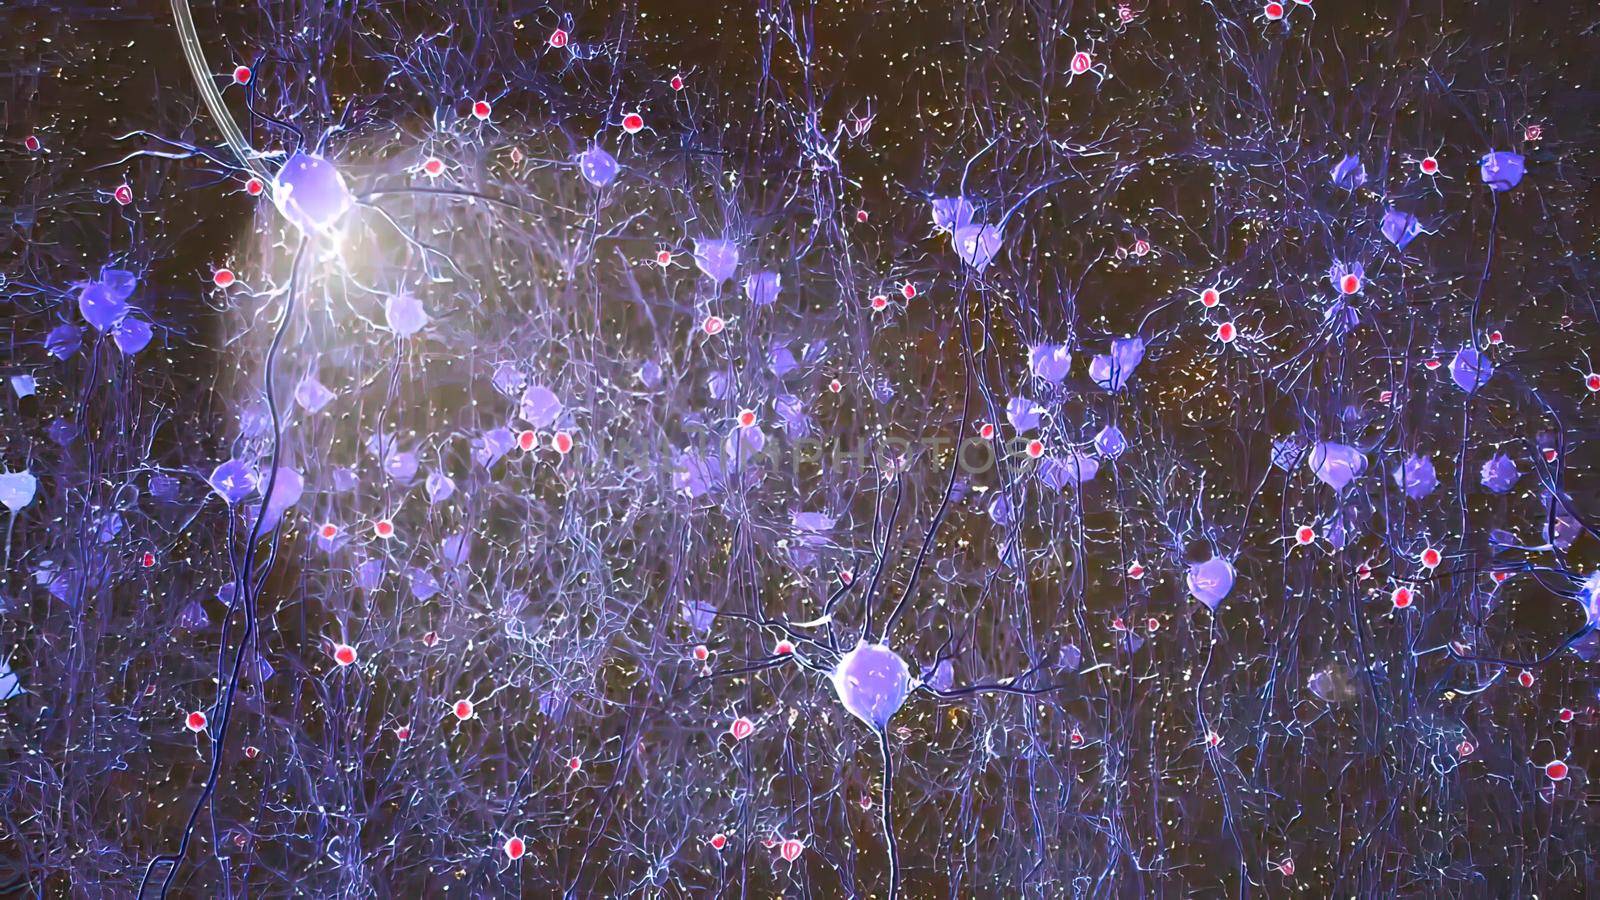 Microglial Dynamics During Human Brain Development by creativepic